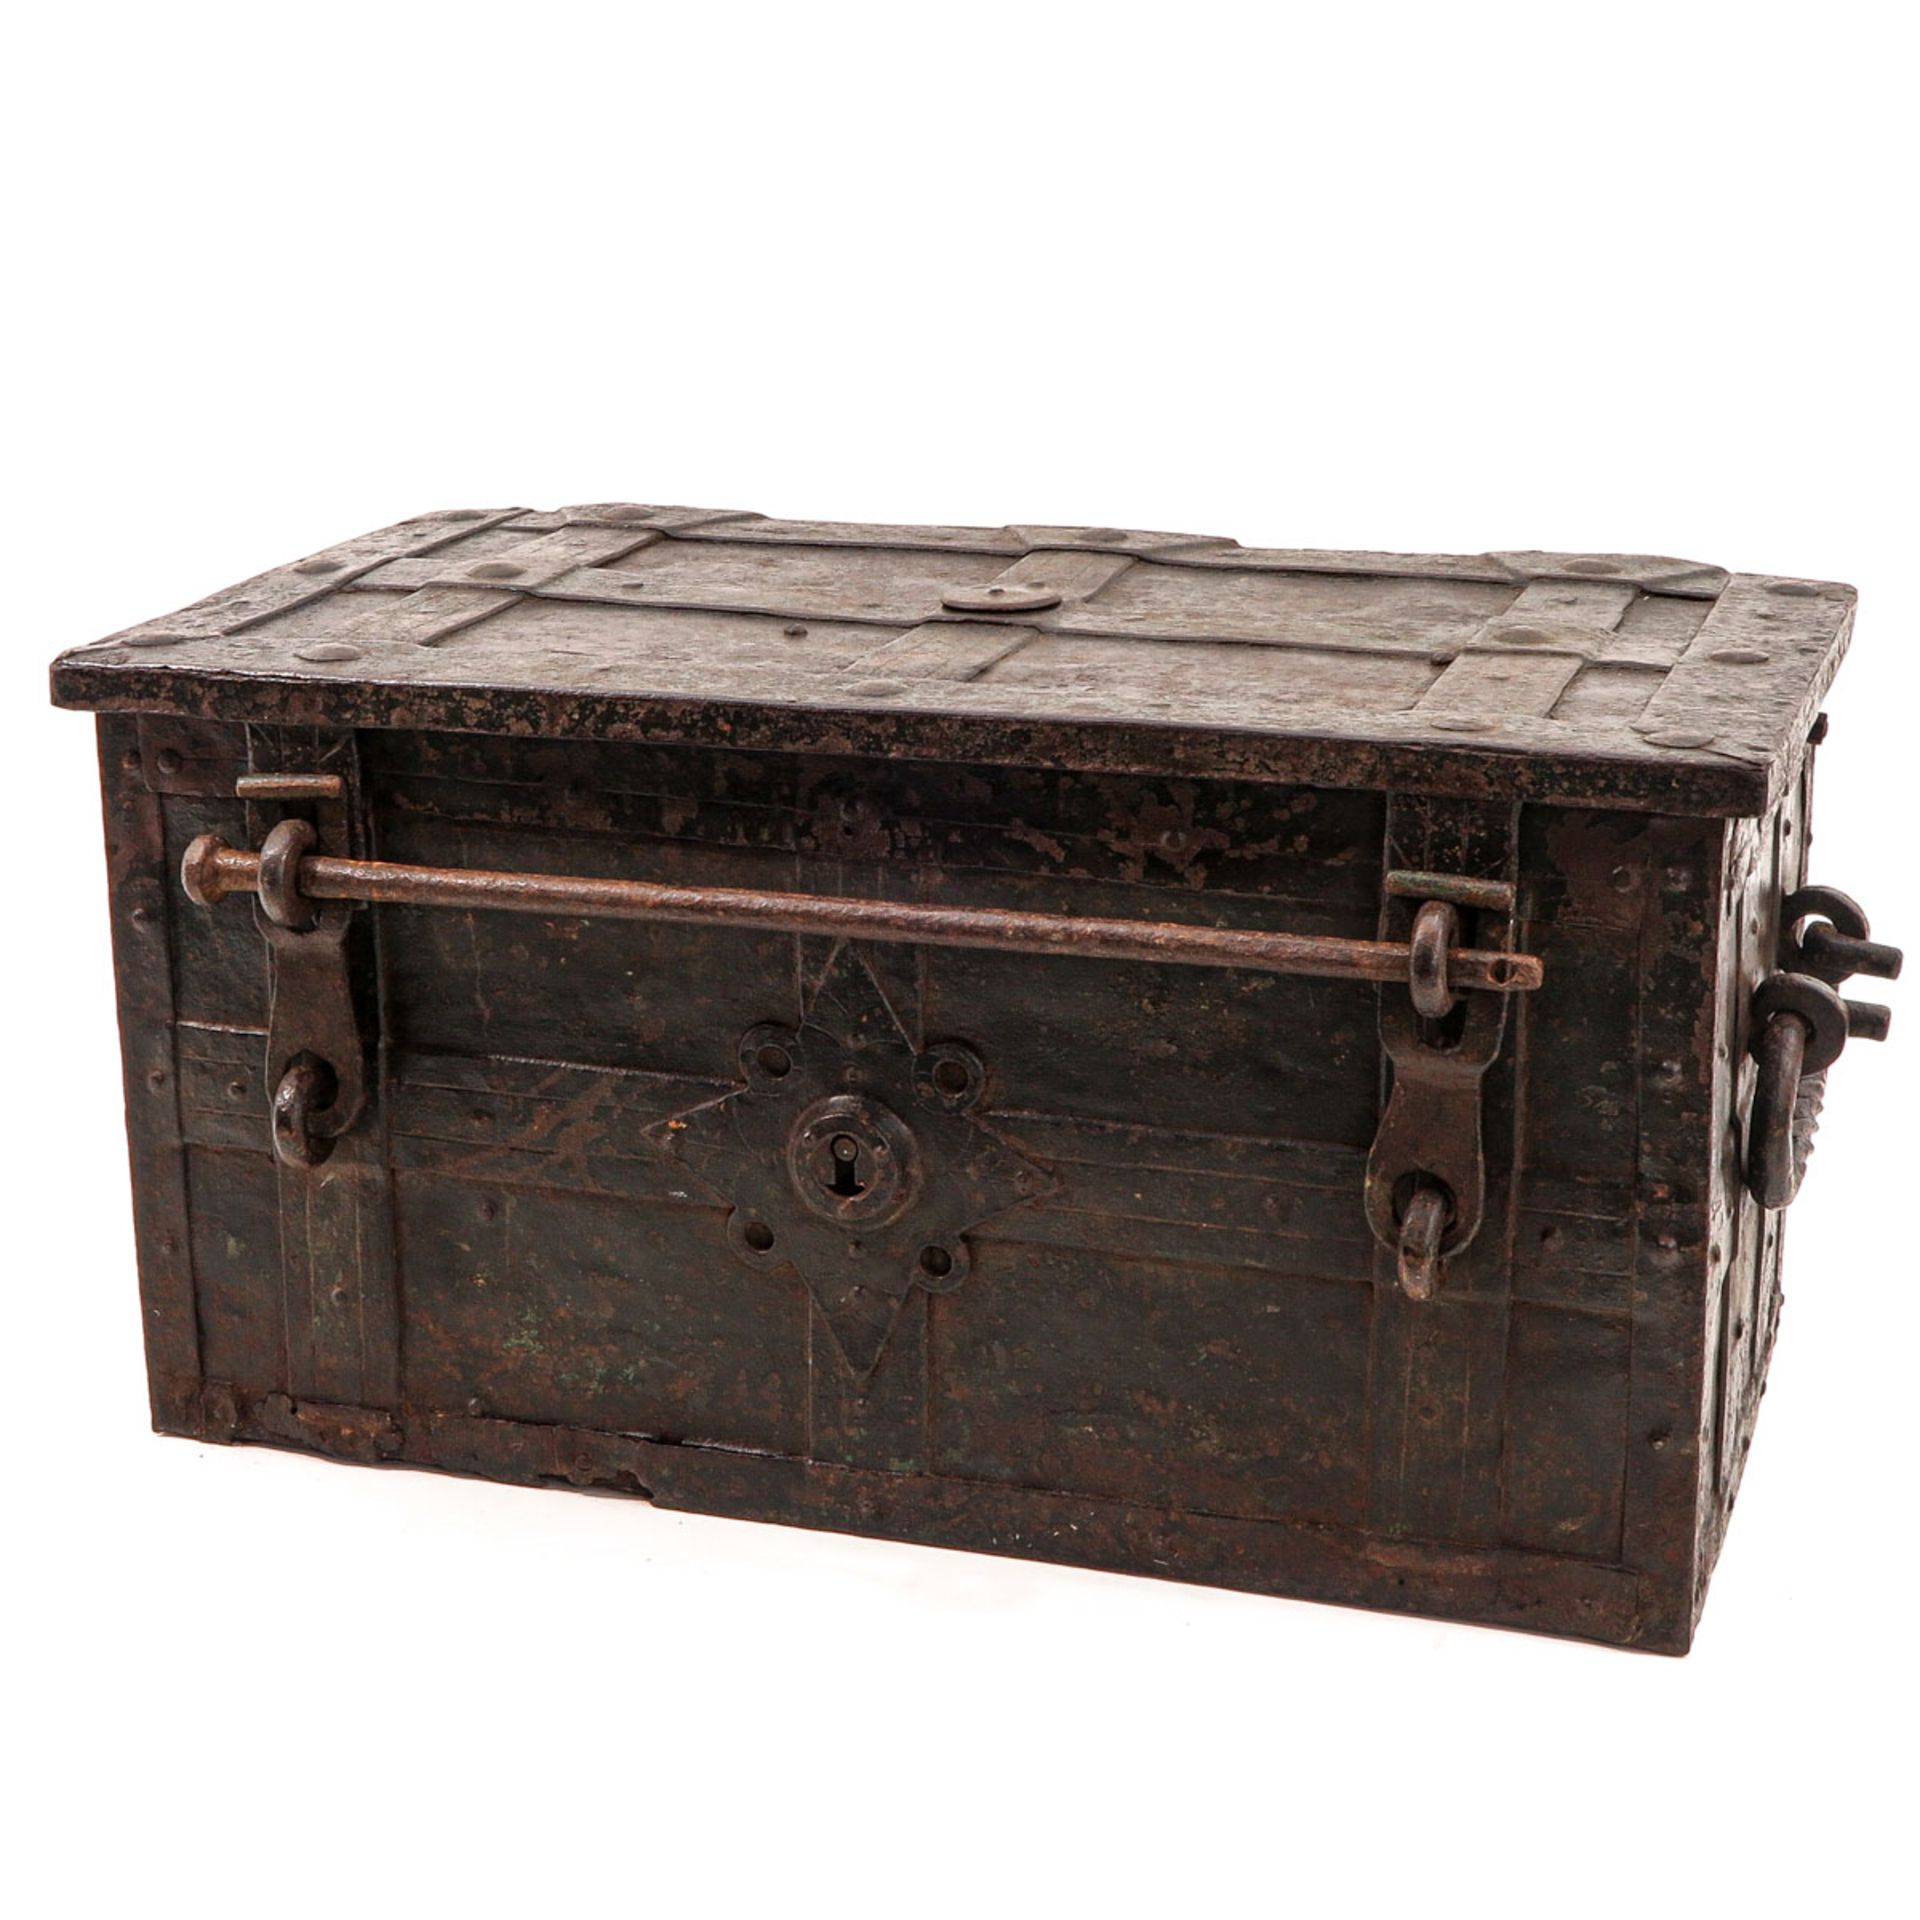 A Wrought Iron Treasure Box